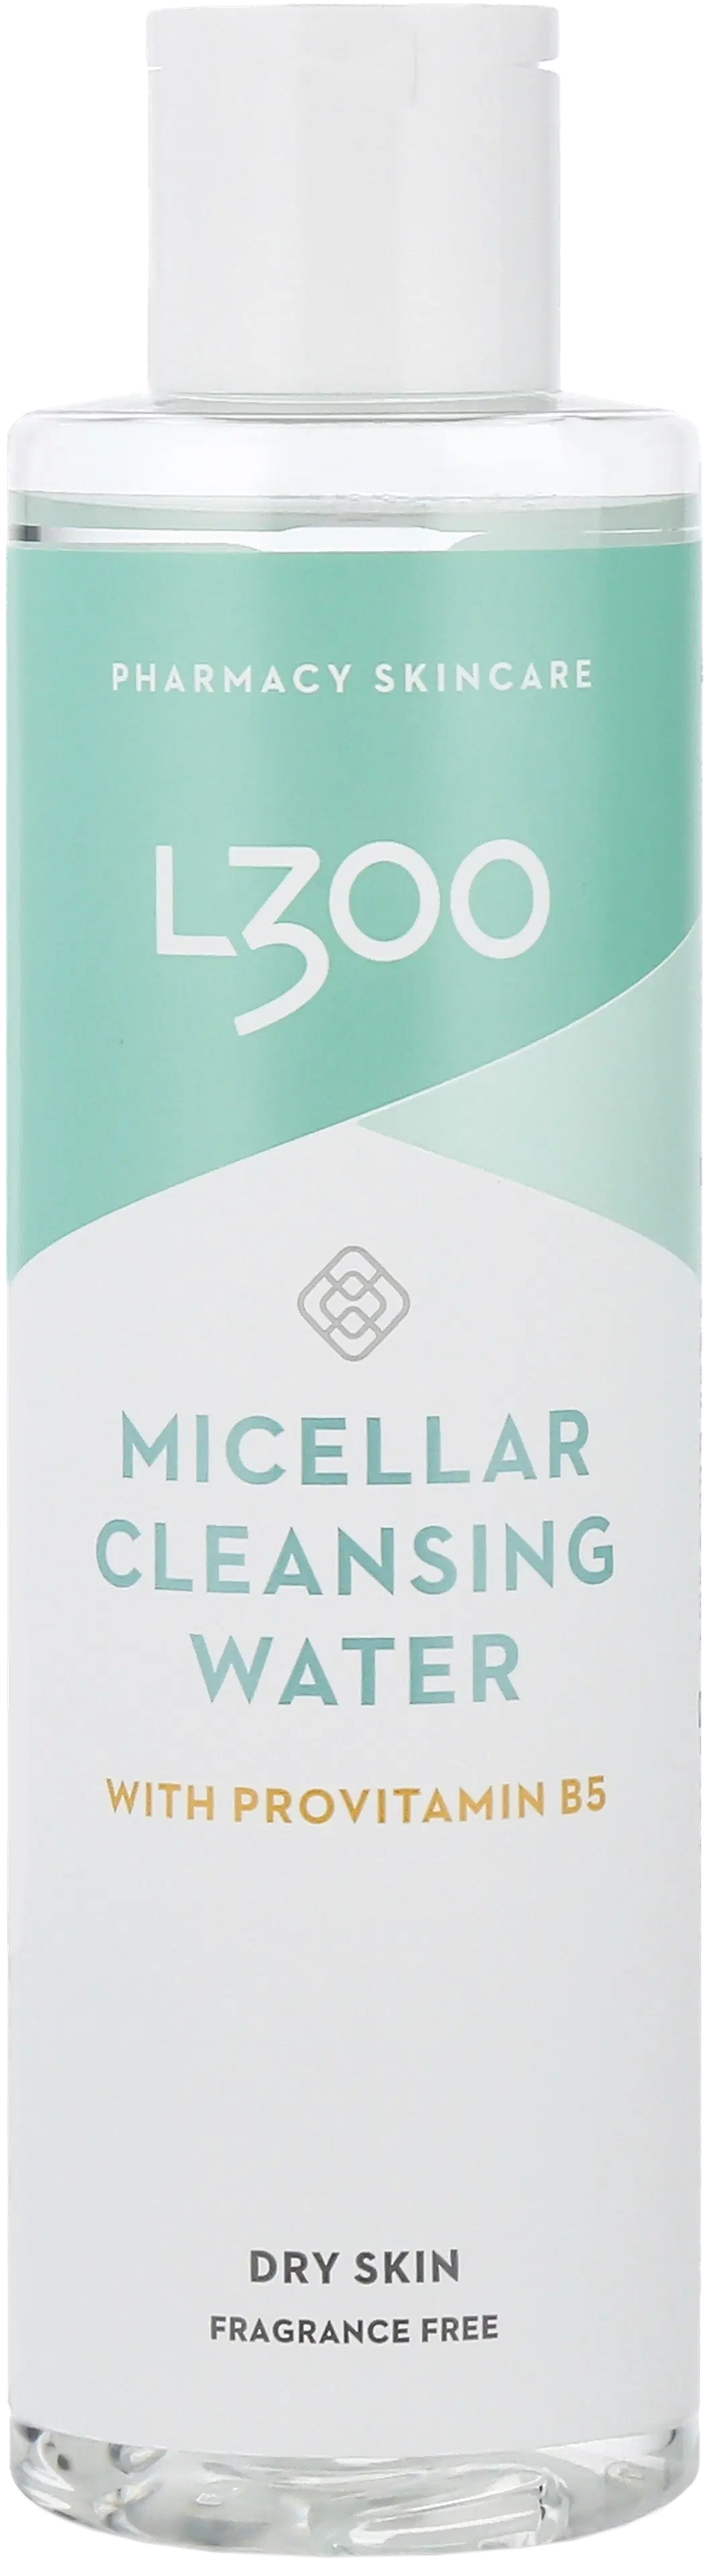 L300 Micellar Cleansing Water with Provitamin B5 kuivan ihon puhdistusvesi 200ml